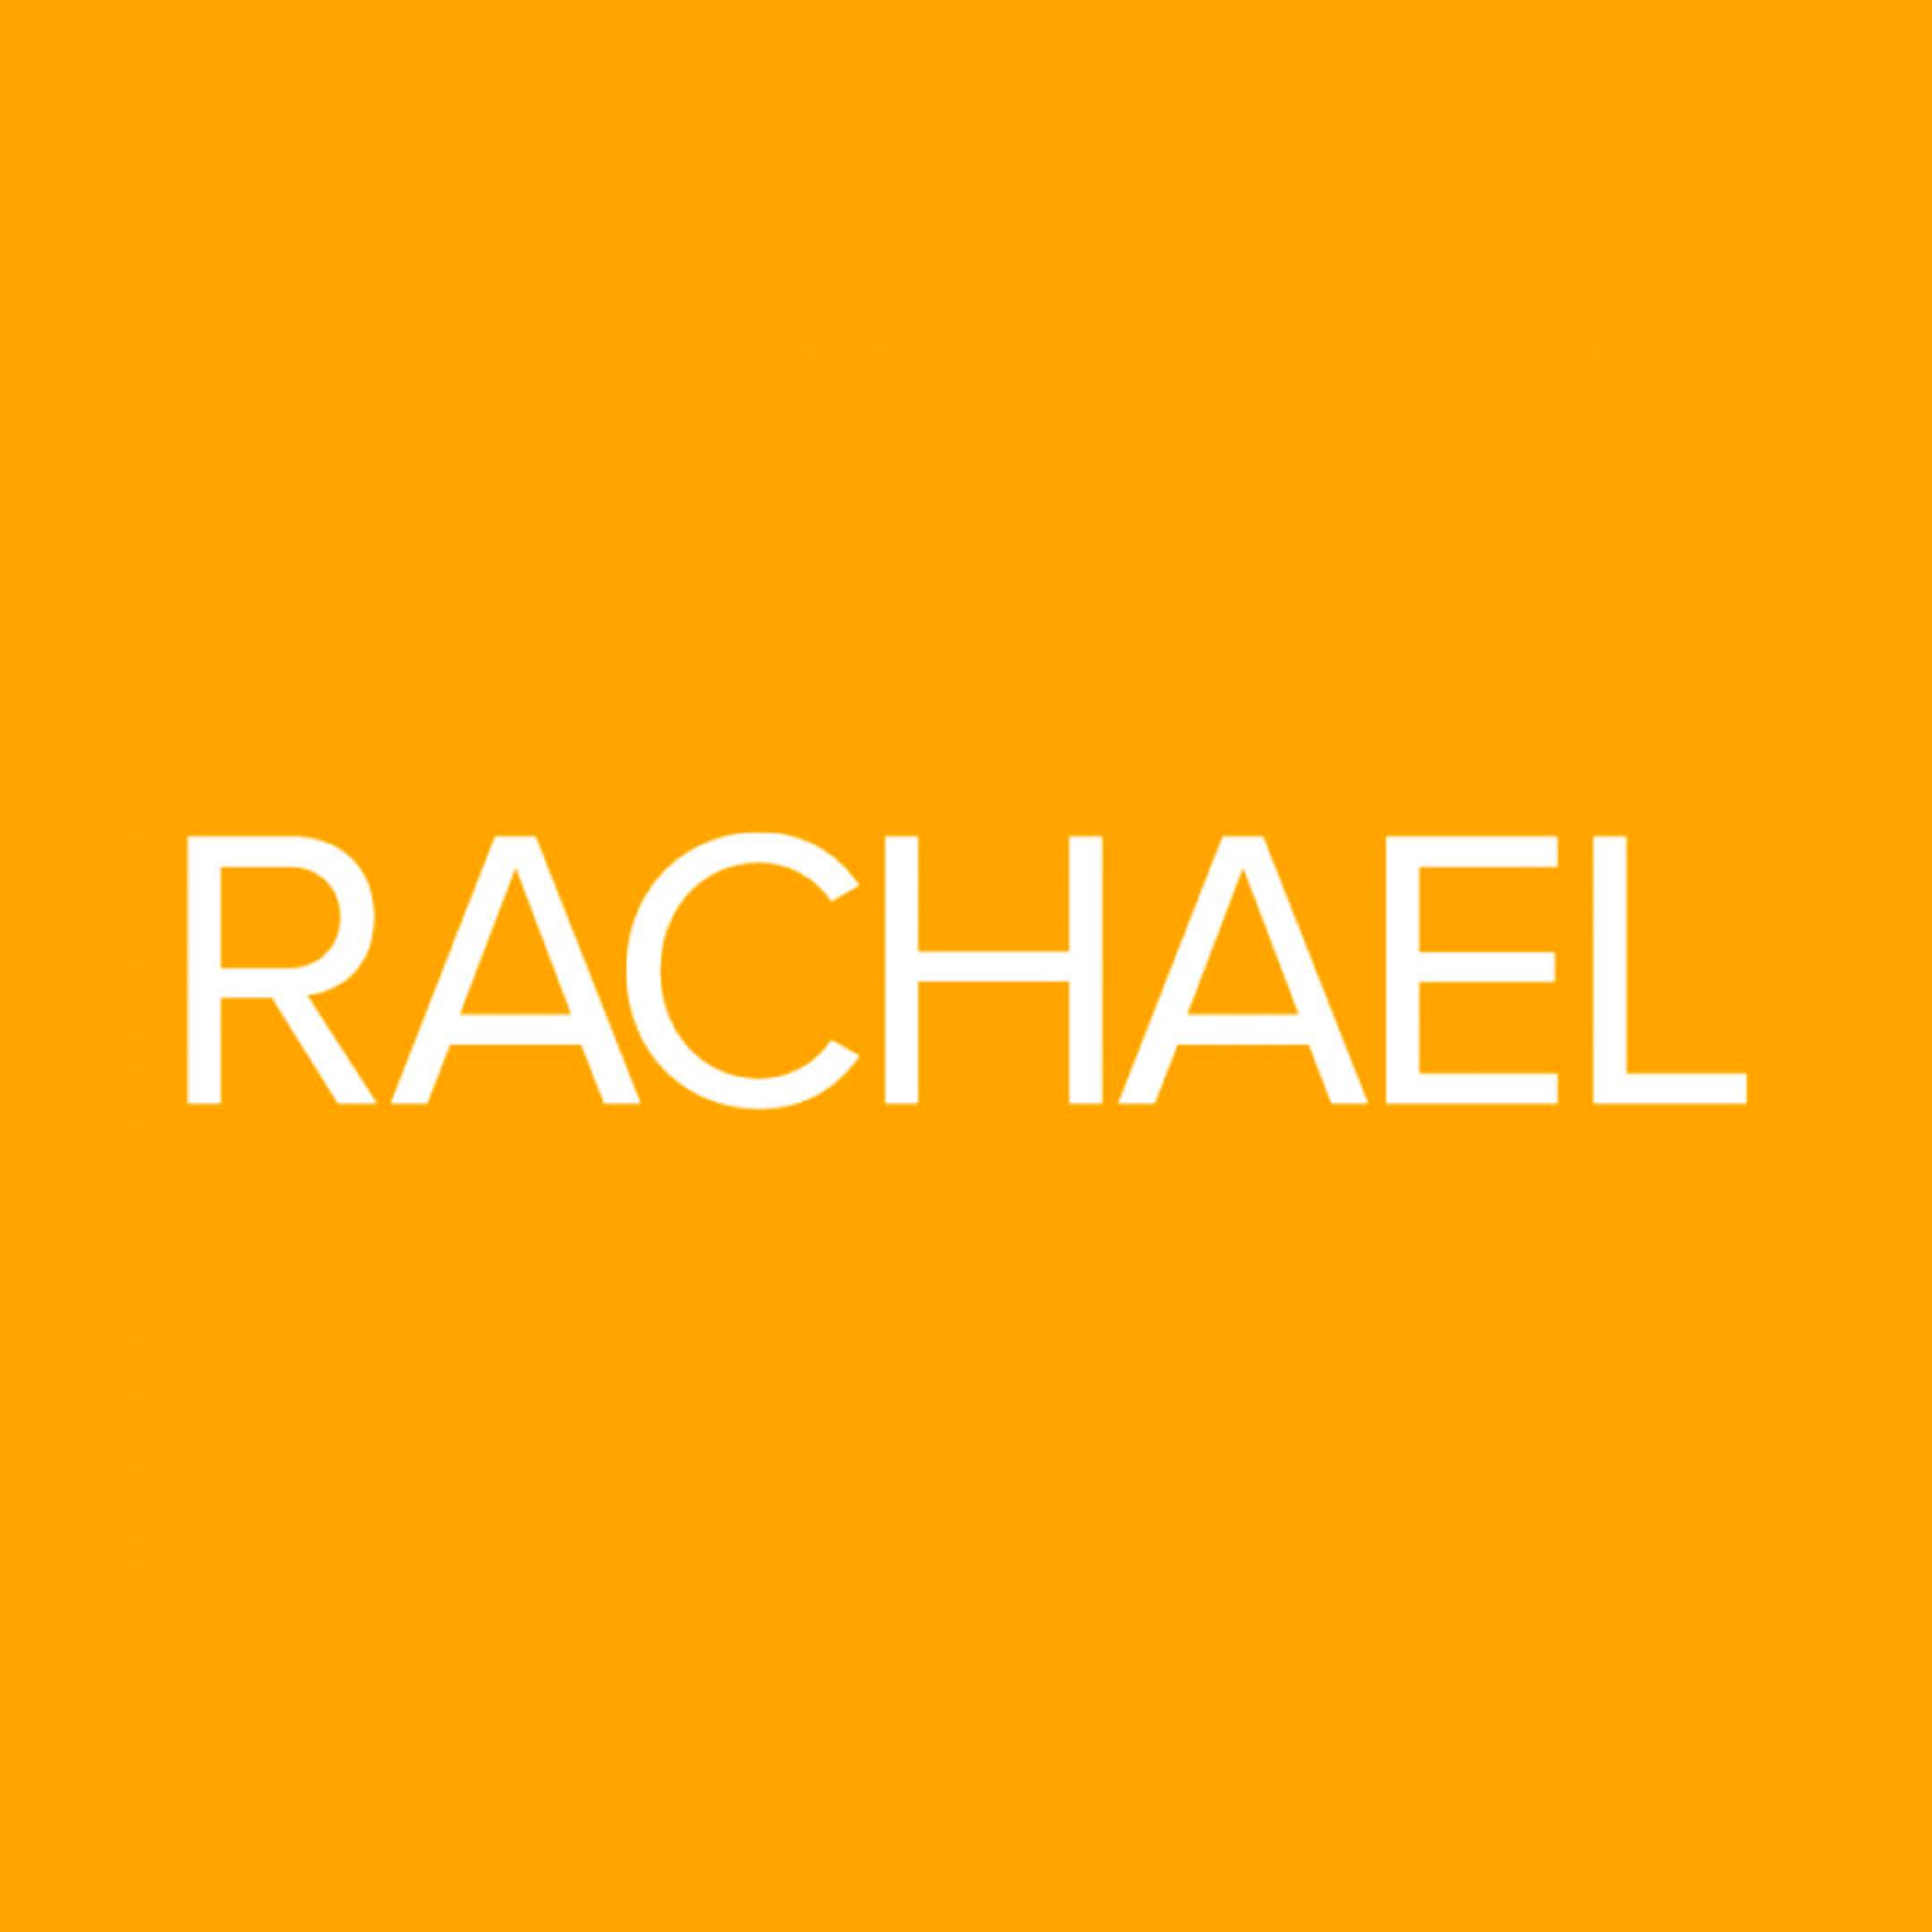 Rachael Ray logo on orange background 